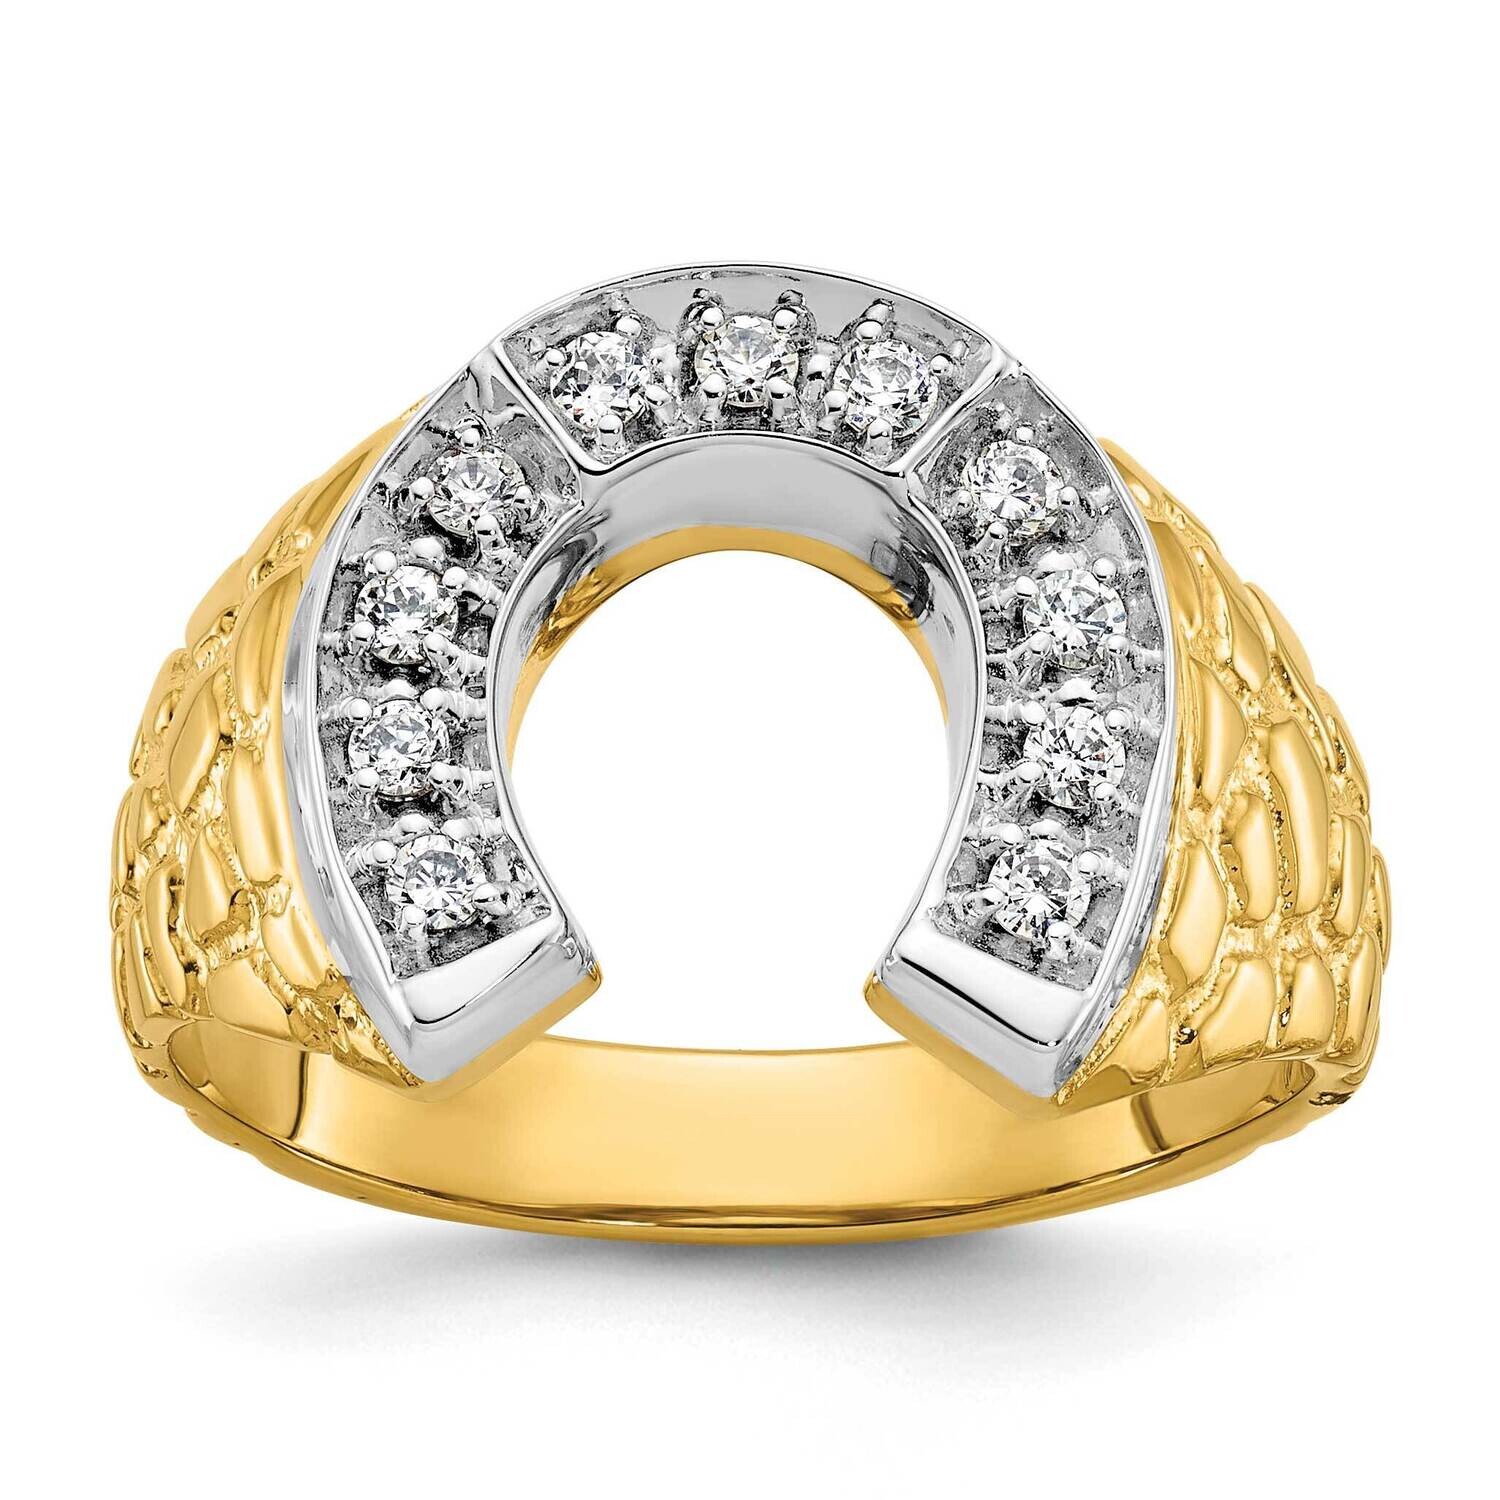 Ibgoodman Men's Horseshoe 1/5 Carat Diamond Complete Ring 14k Two-Tone Gold B04976-4YWAA